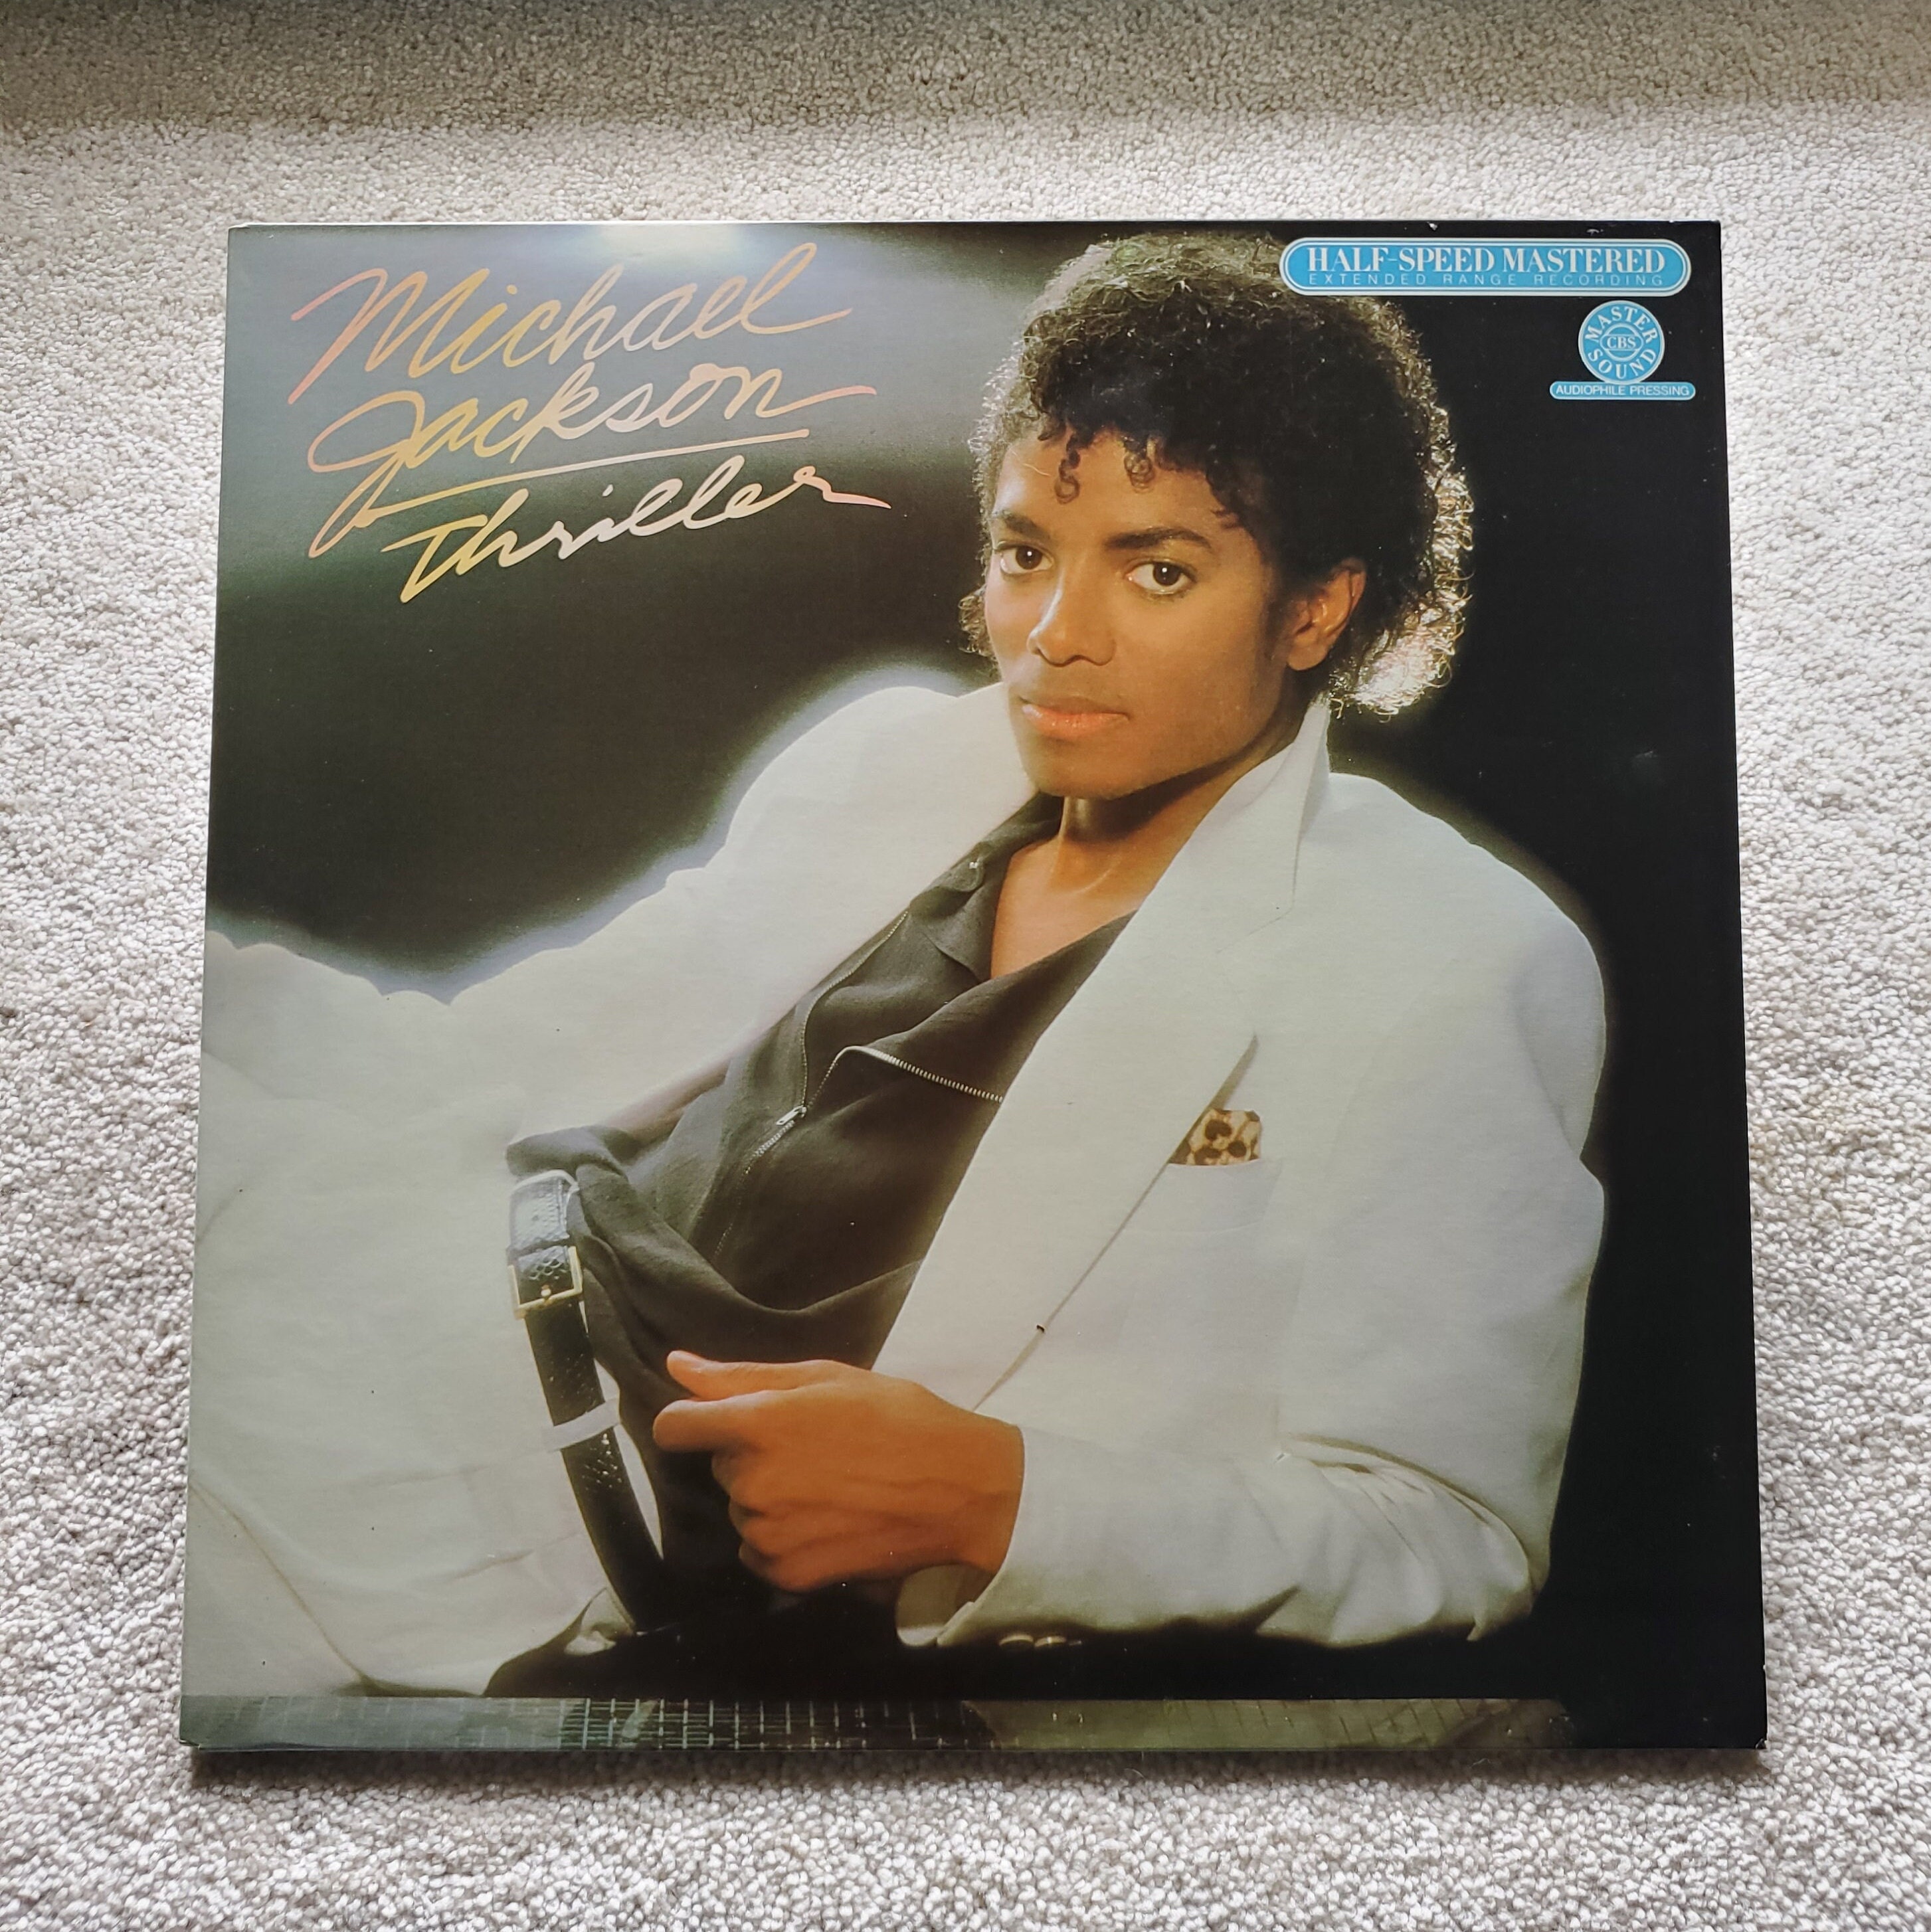 Michael half-speed Vinyl Thriller Lp - Etsy